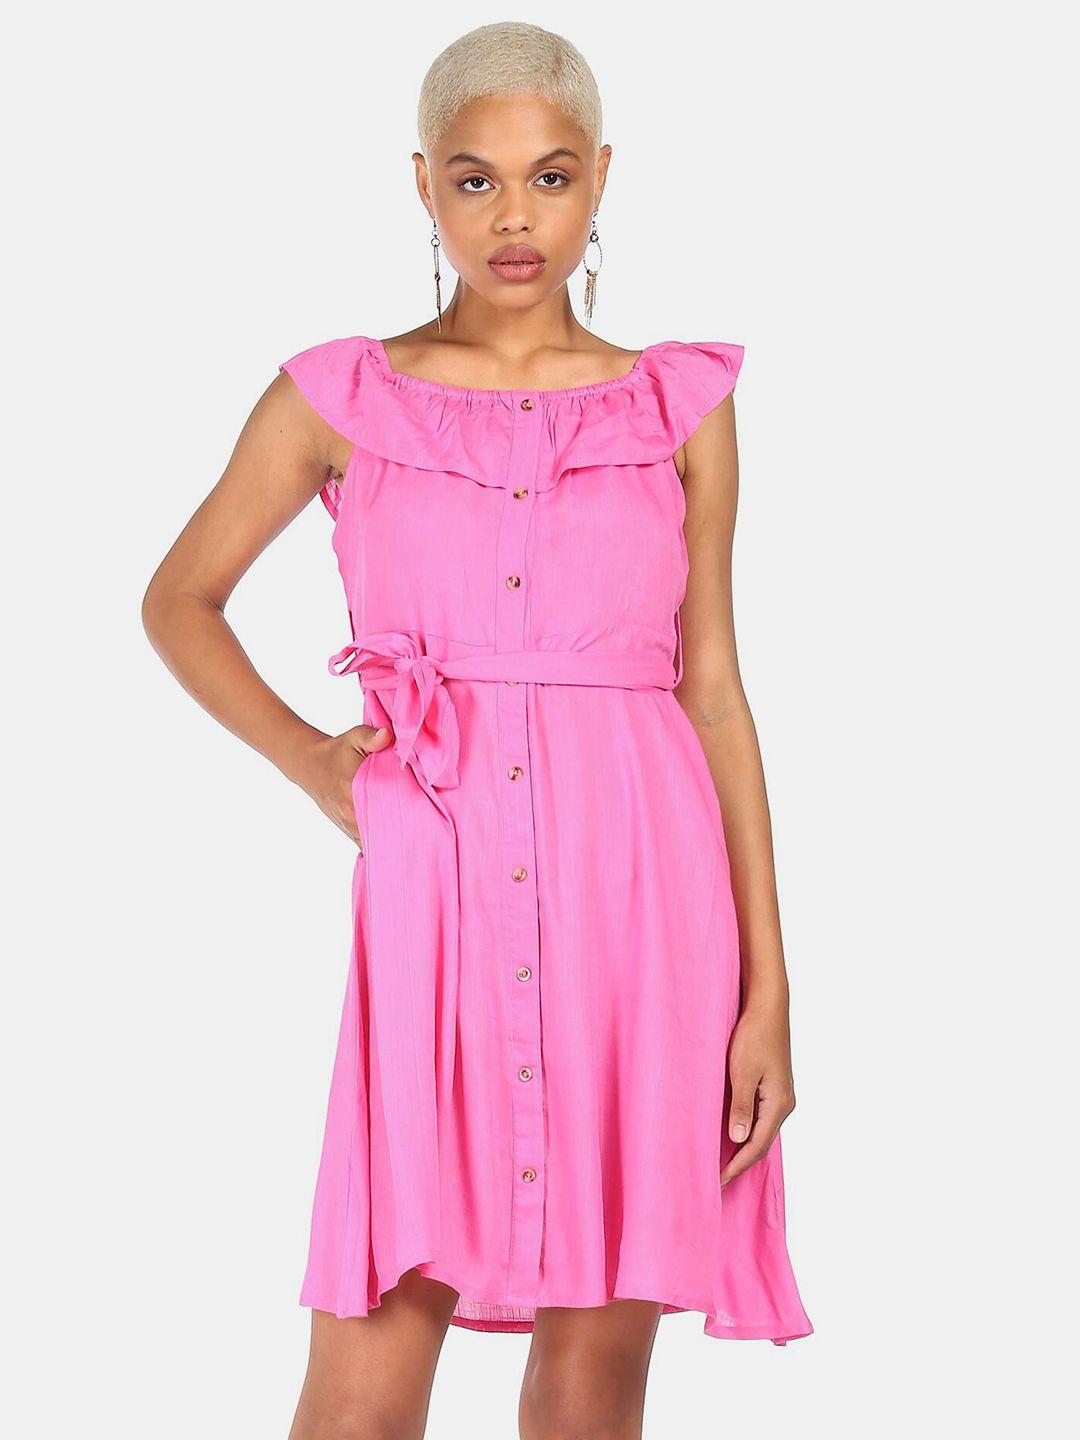 sugr-pink-dress